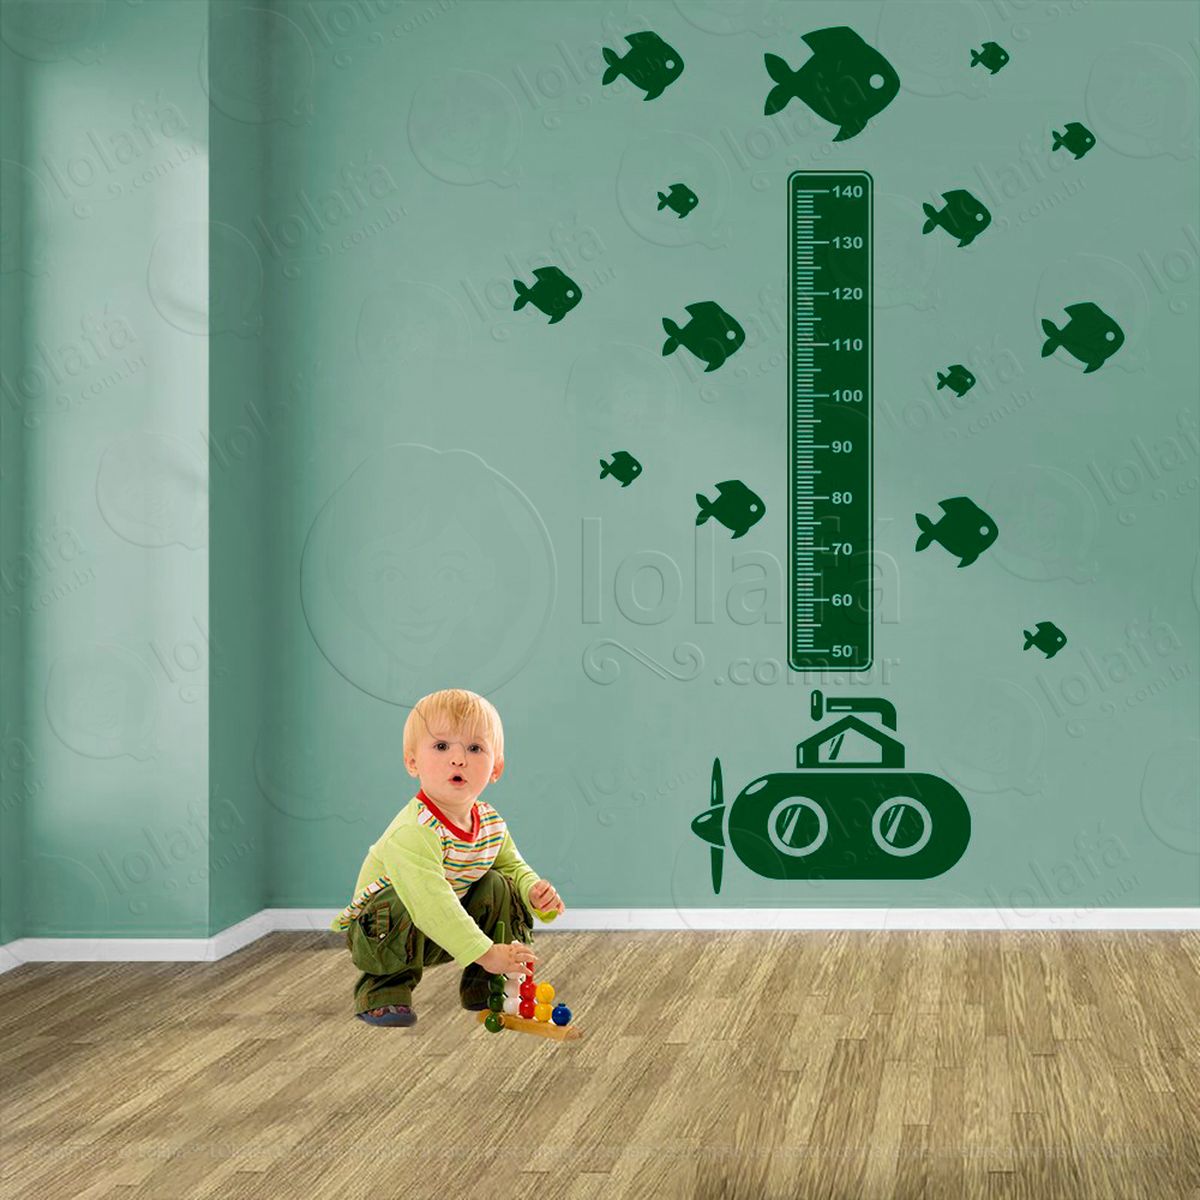 submarino e peixes adesivo régua de crescimento infantil, medidor de altura para quarto, porta e parede - mod:1482